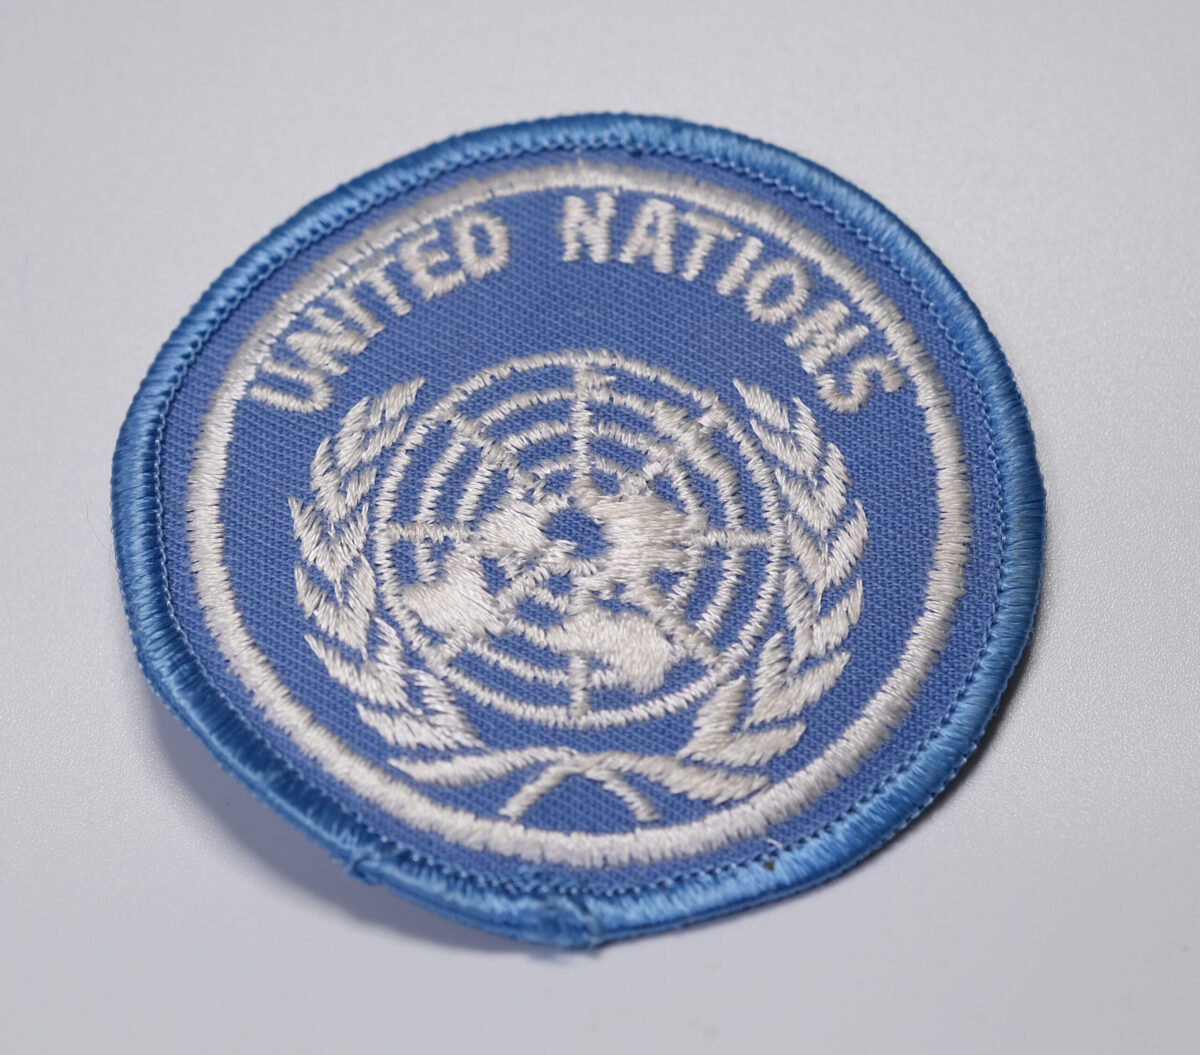 United Nations cloth badge